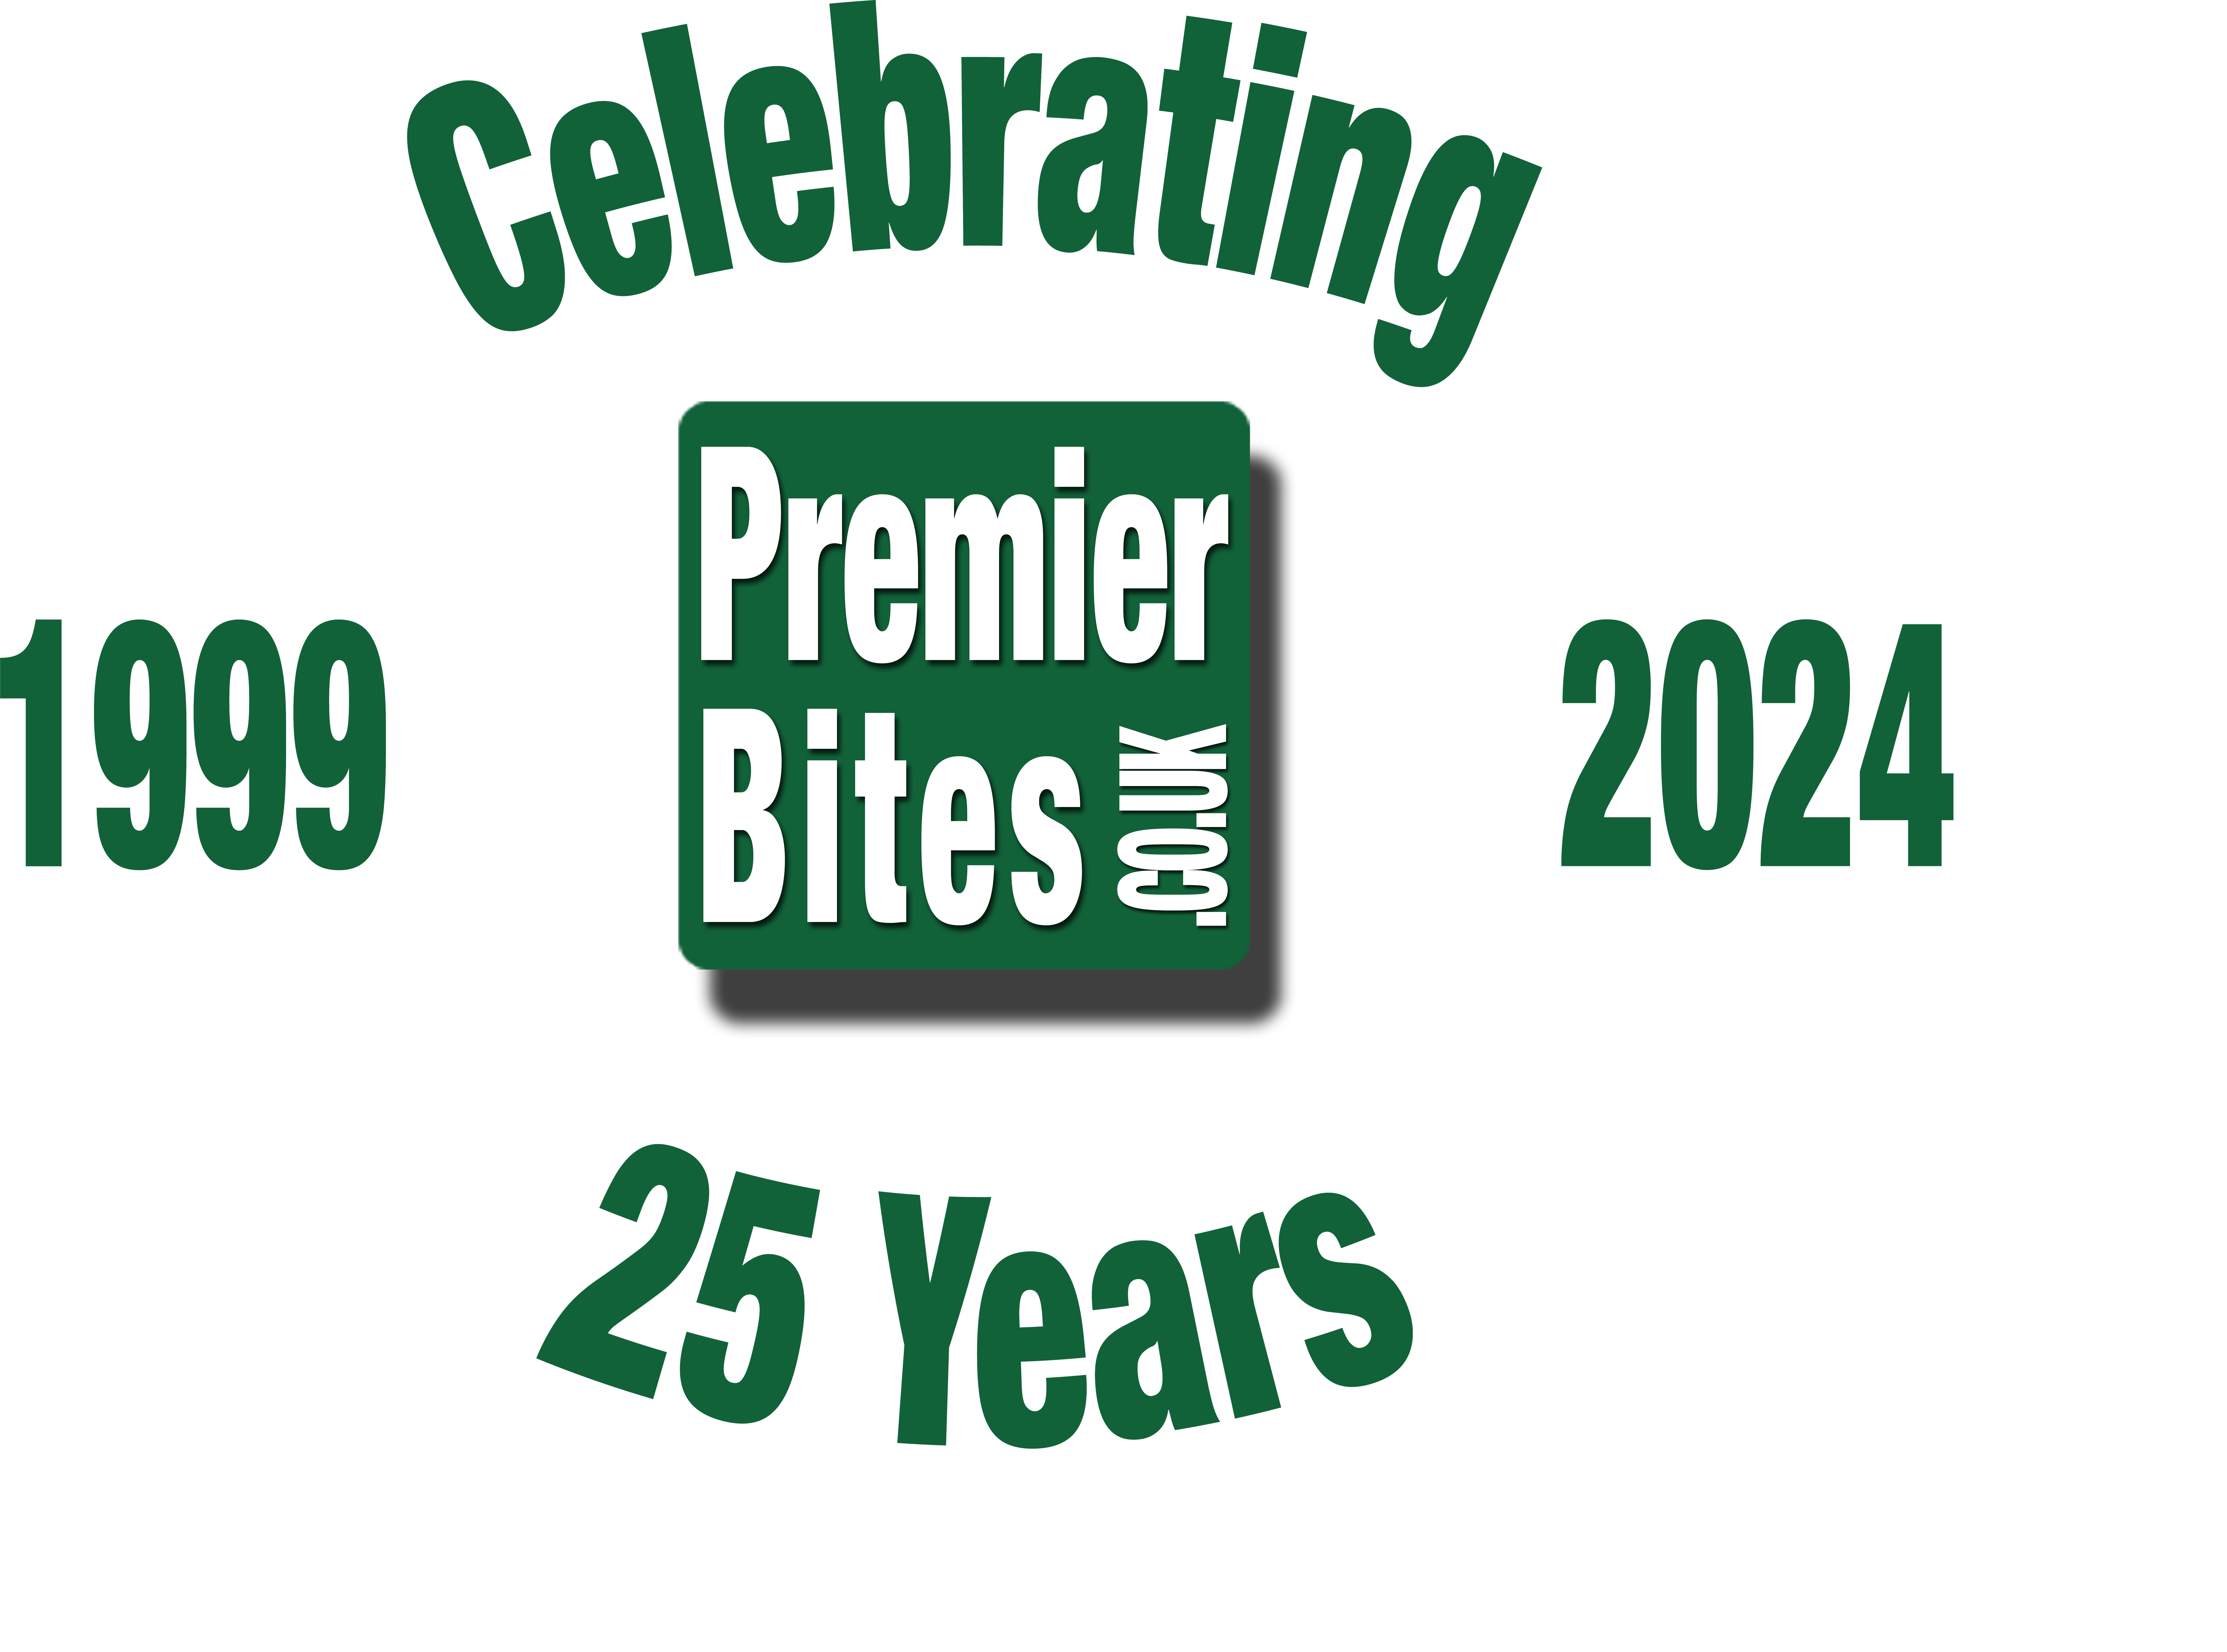 Premier Bites Catering Company